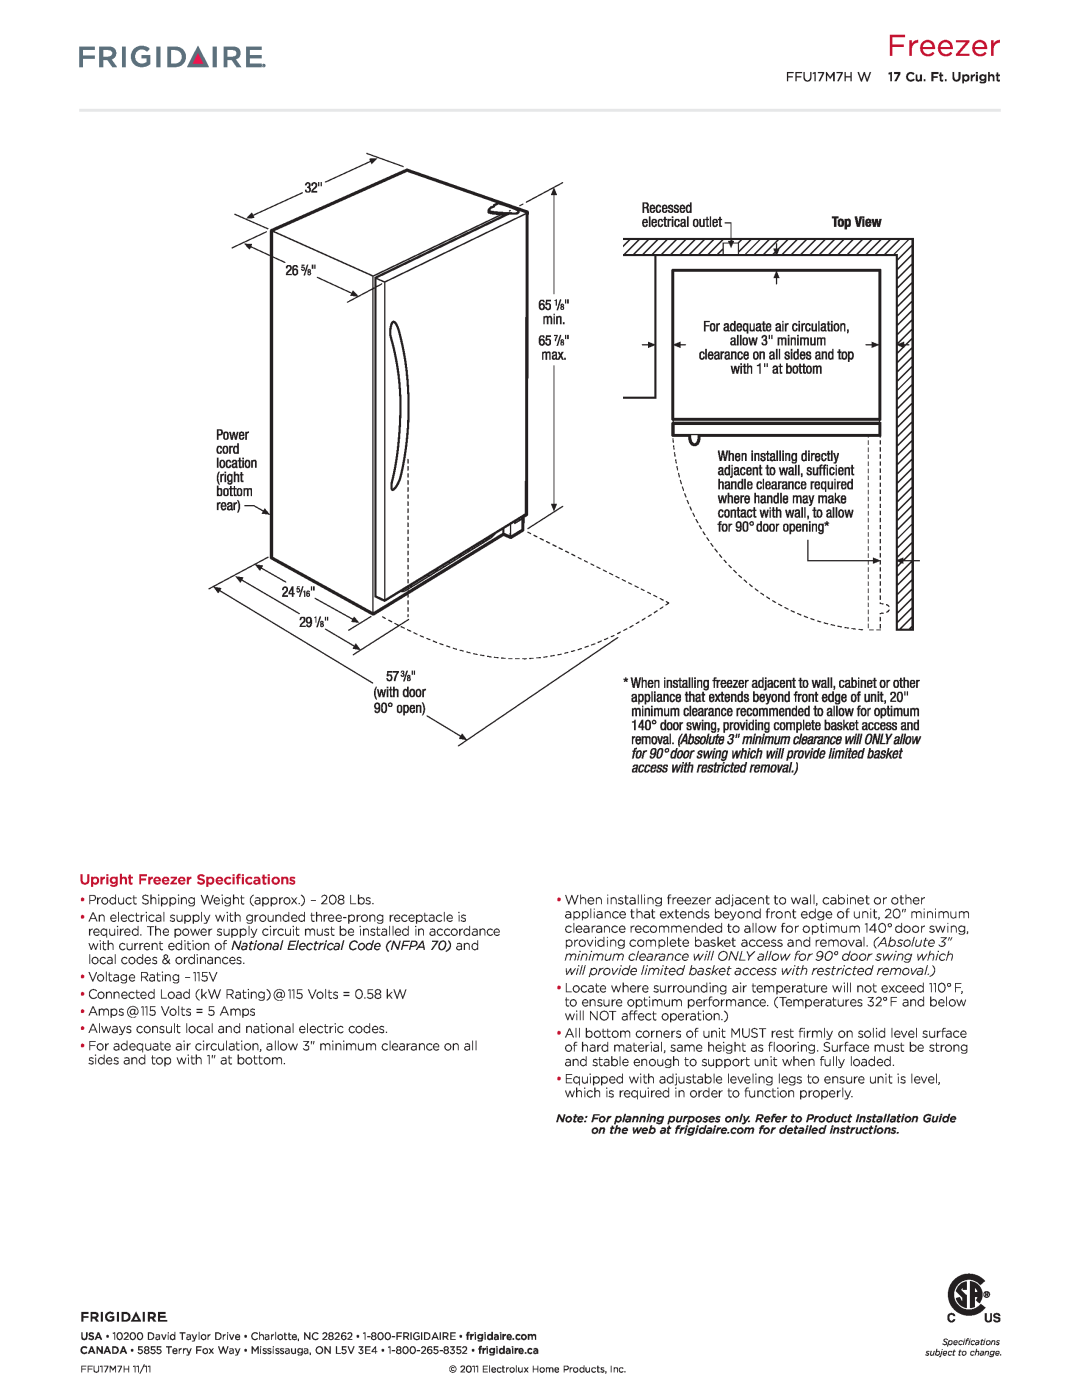 Frigidaire FFU17M7H W dimensions Upright Freezer Specifications 